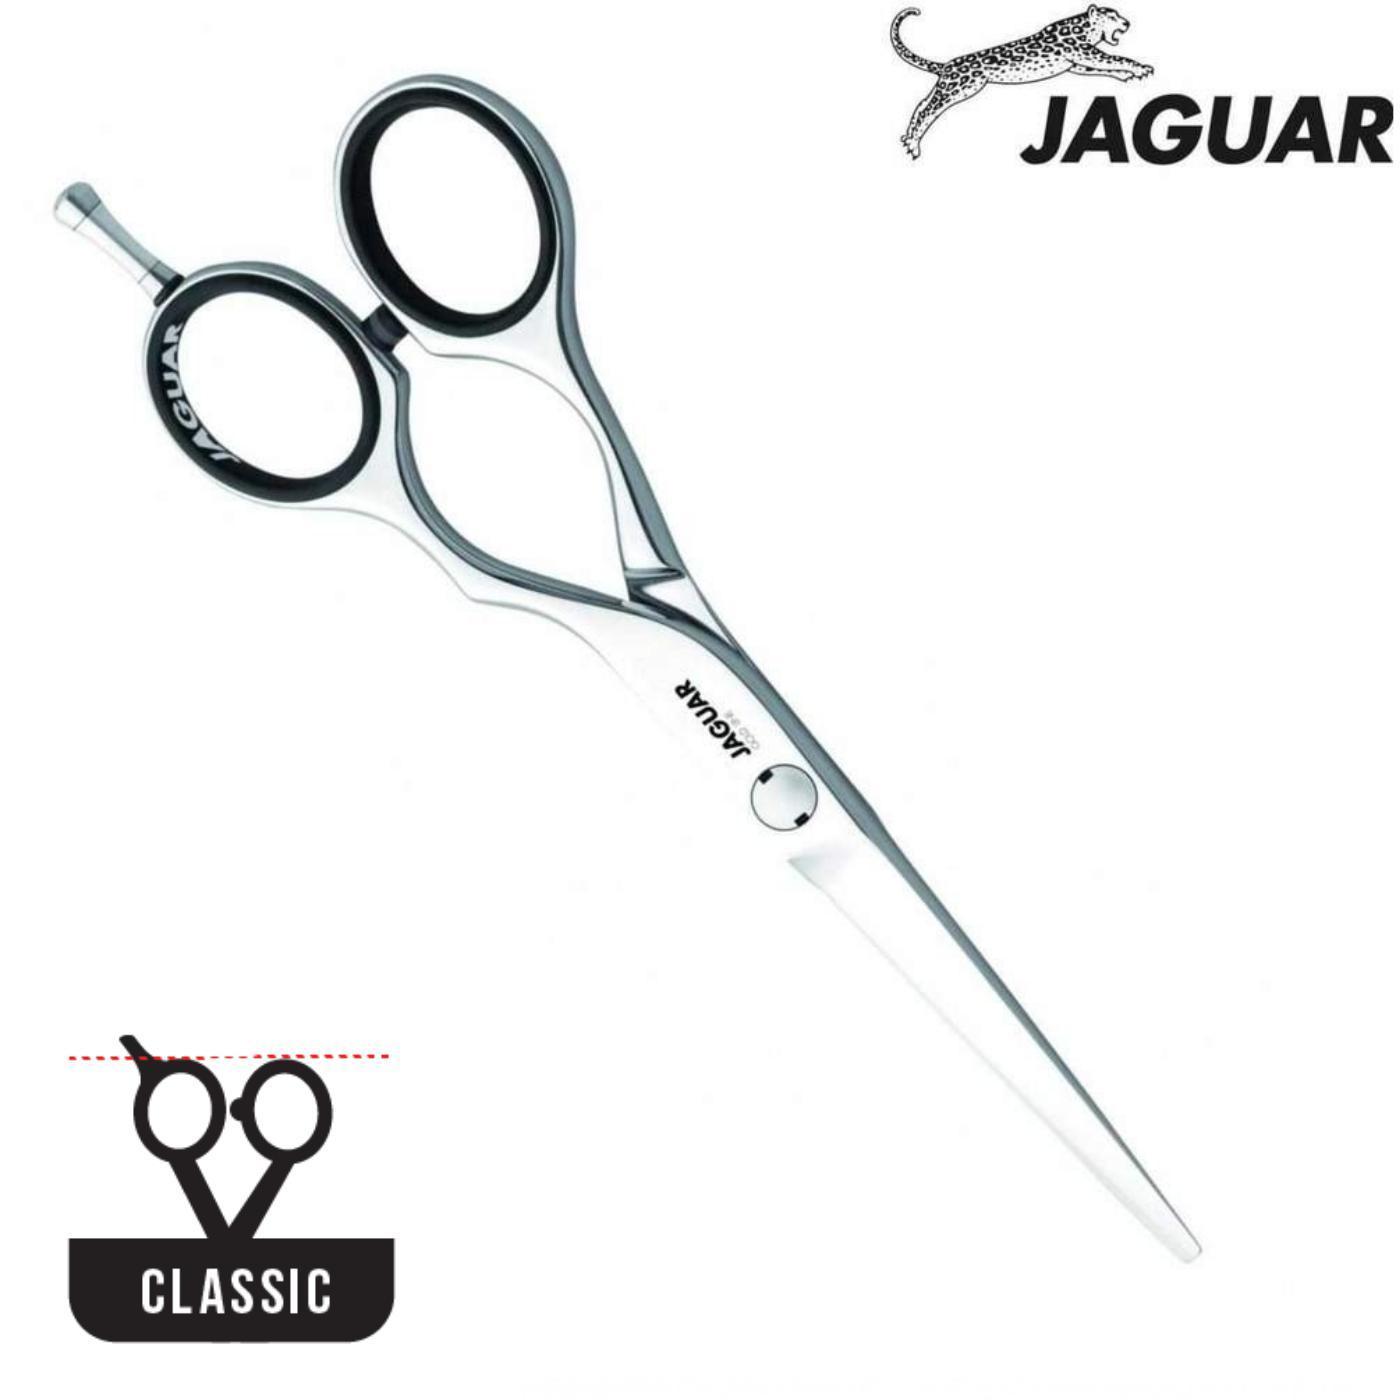 Jaguar Gold Line Diamond Hair Cutting Scissors - Japan Scissors USA